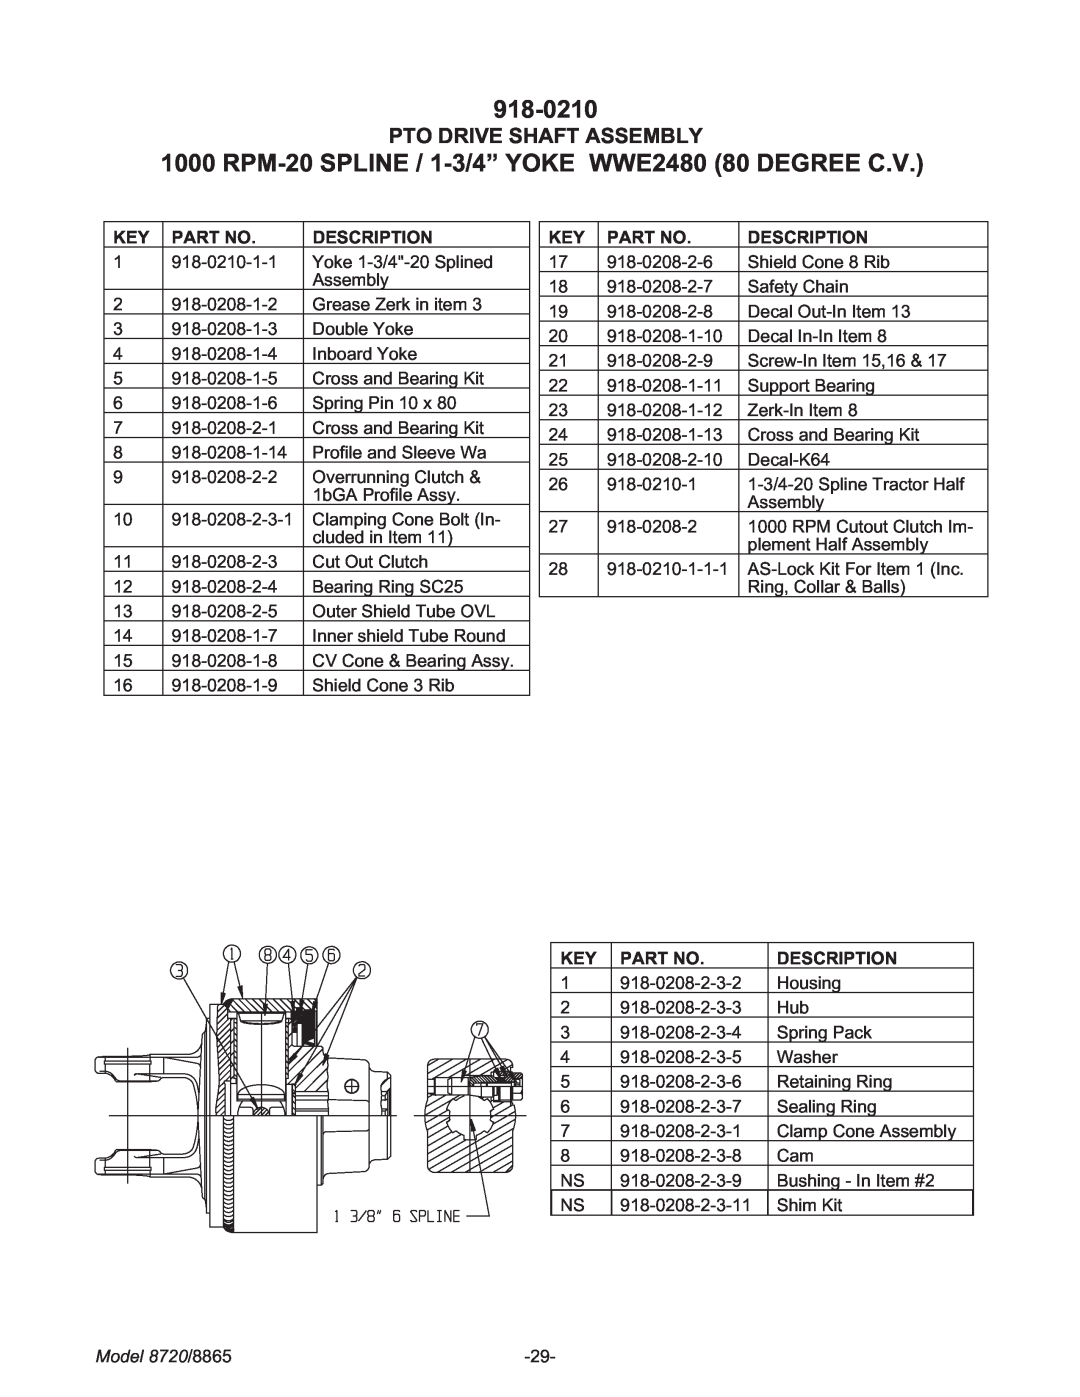 Meyer manual 918-0210, RPM-20 SPLINE / 1-3/4” YOKE WWE2480 80 DEGREE C.V, Pto Drive Shaft Assembly, Model 8720/8865 